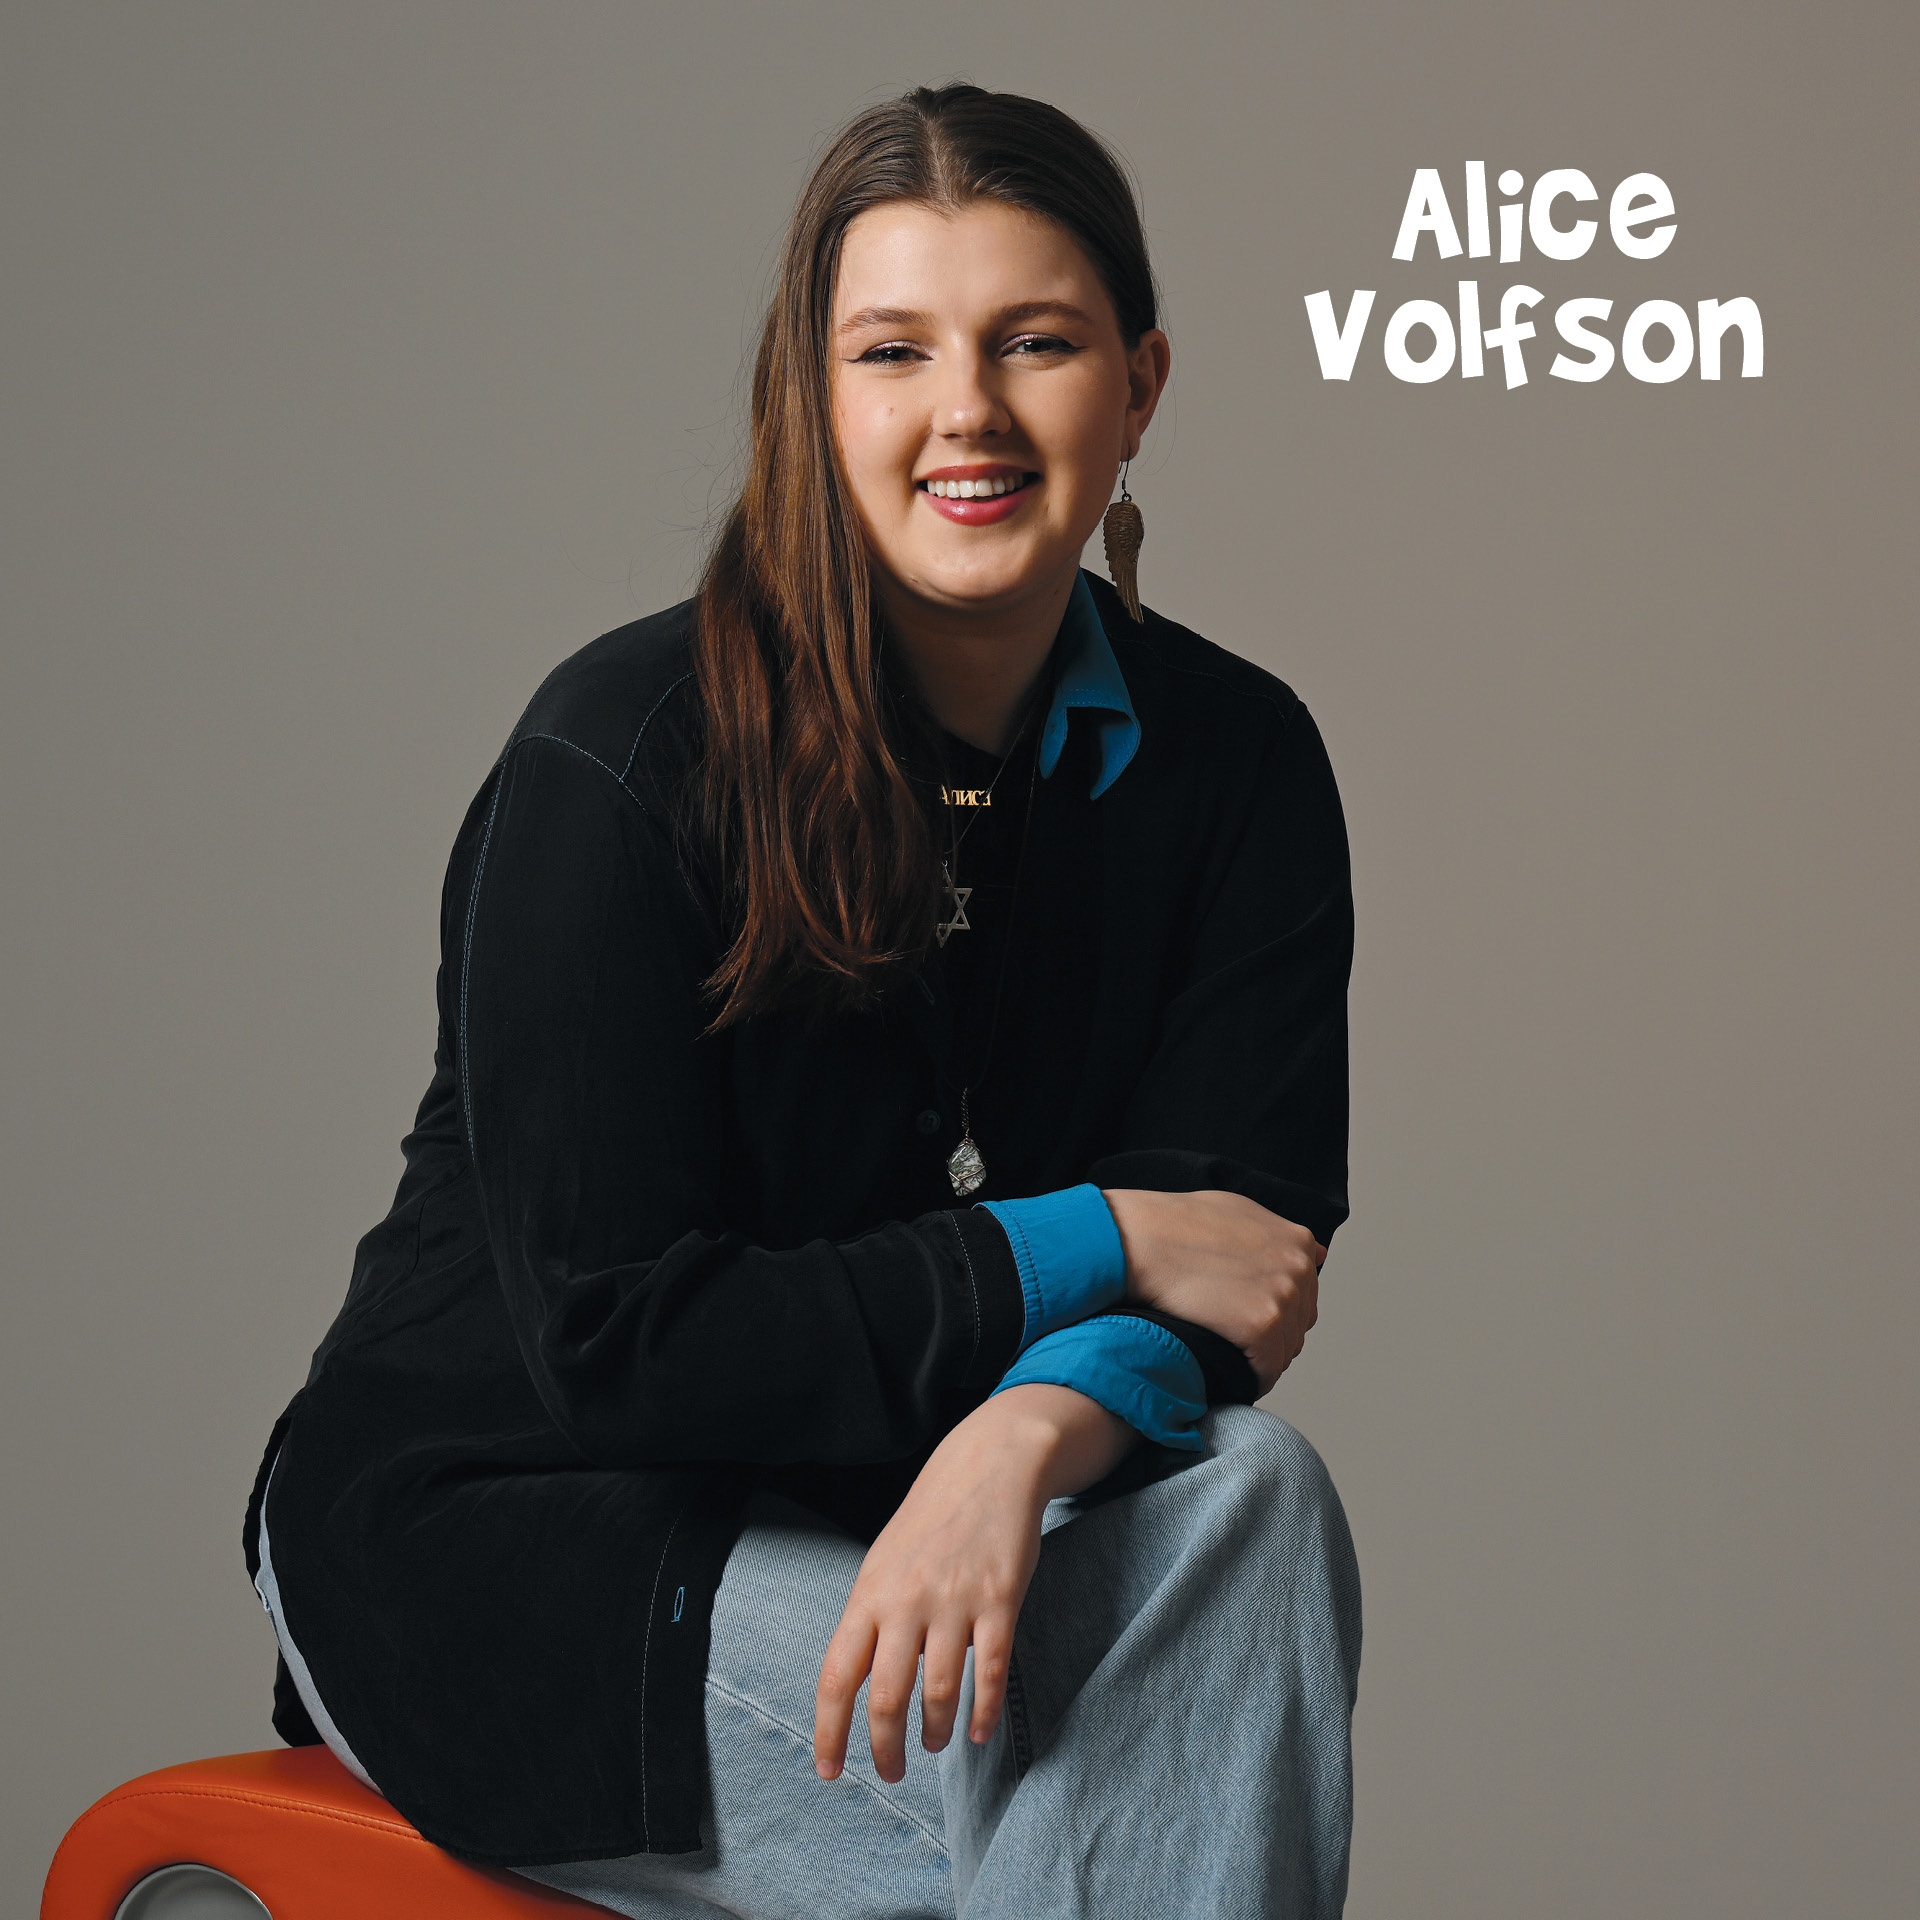 Alice Volfson